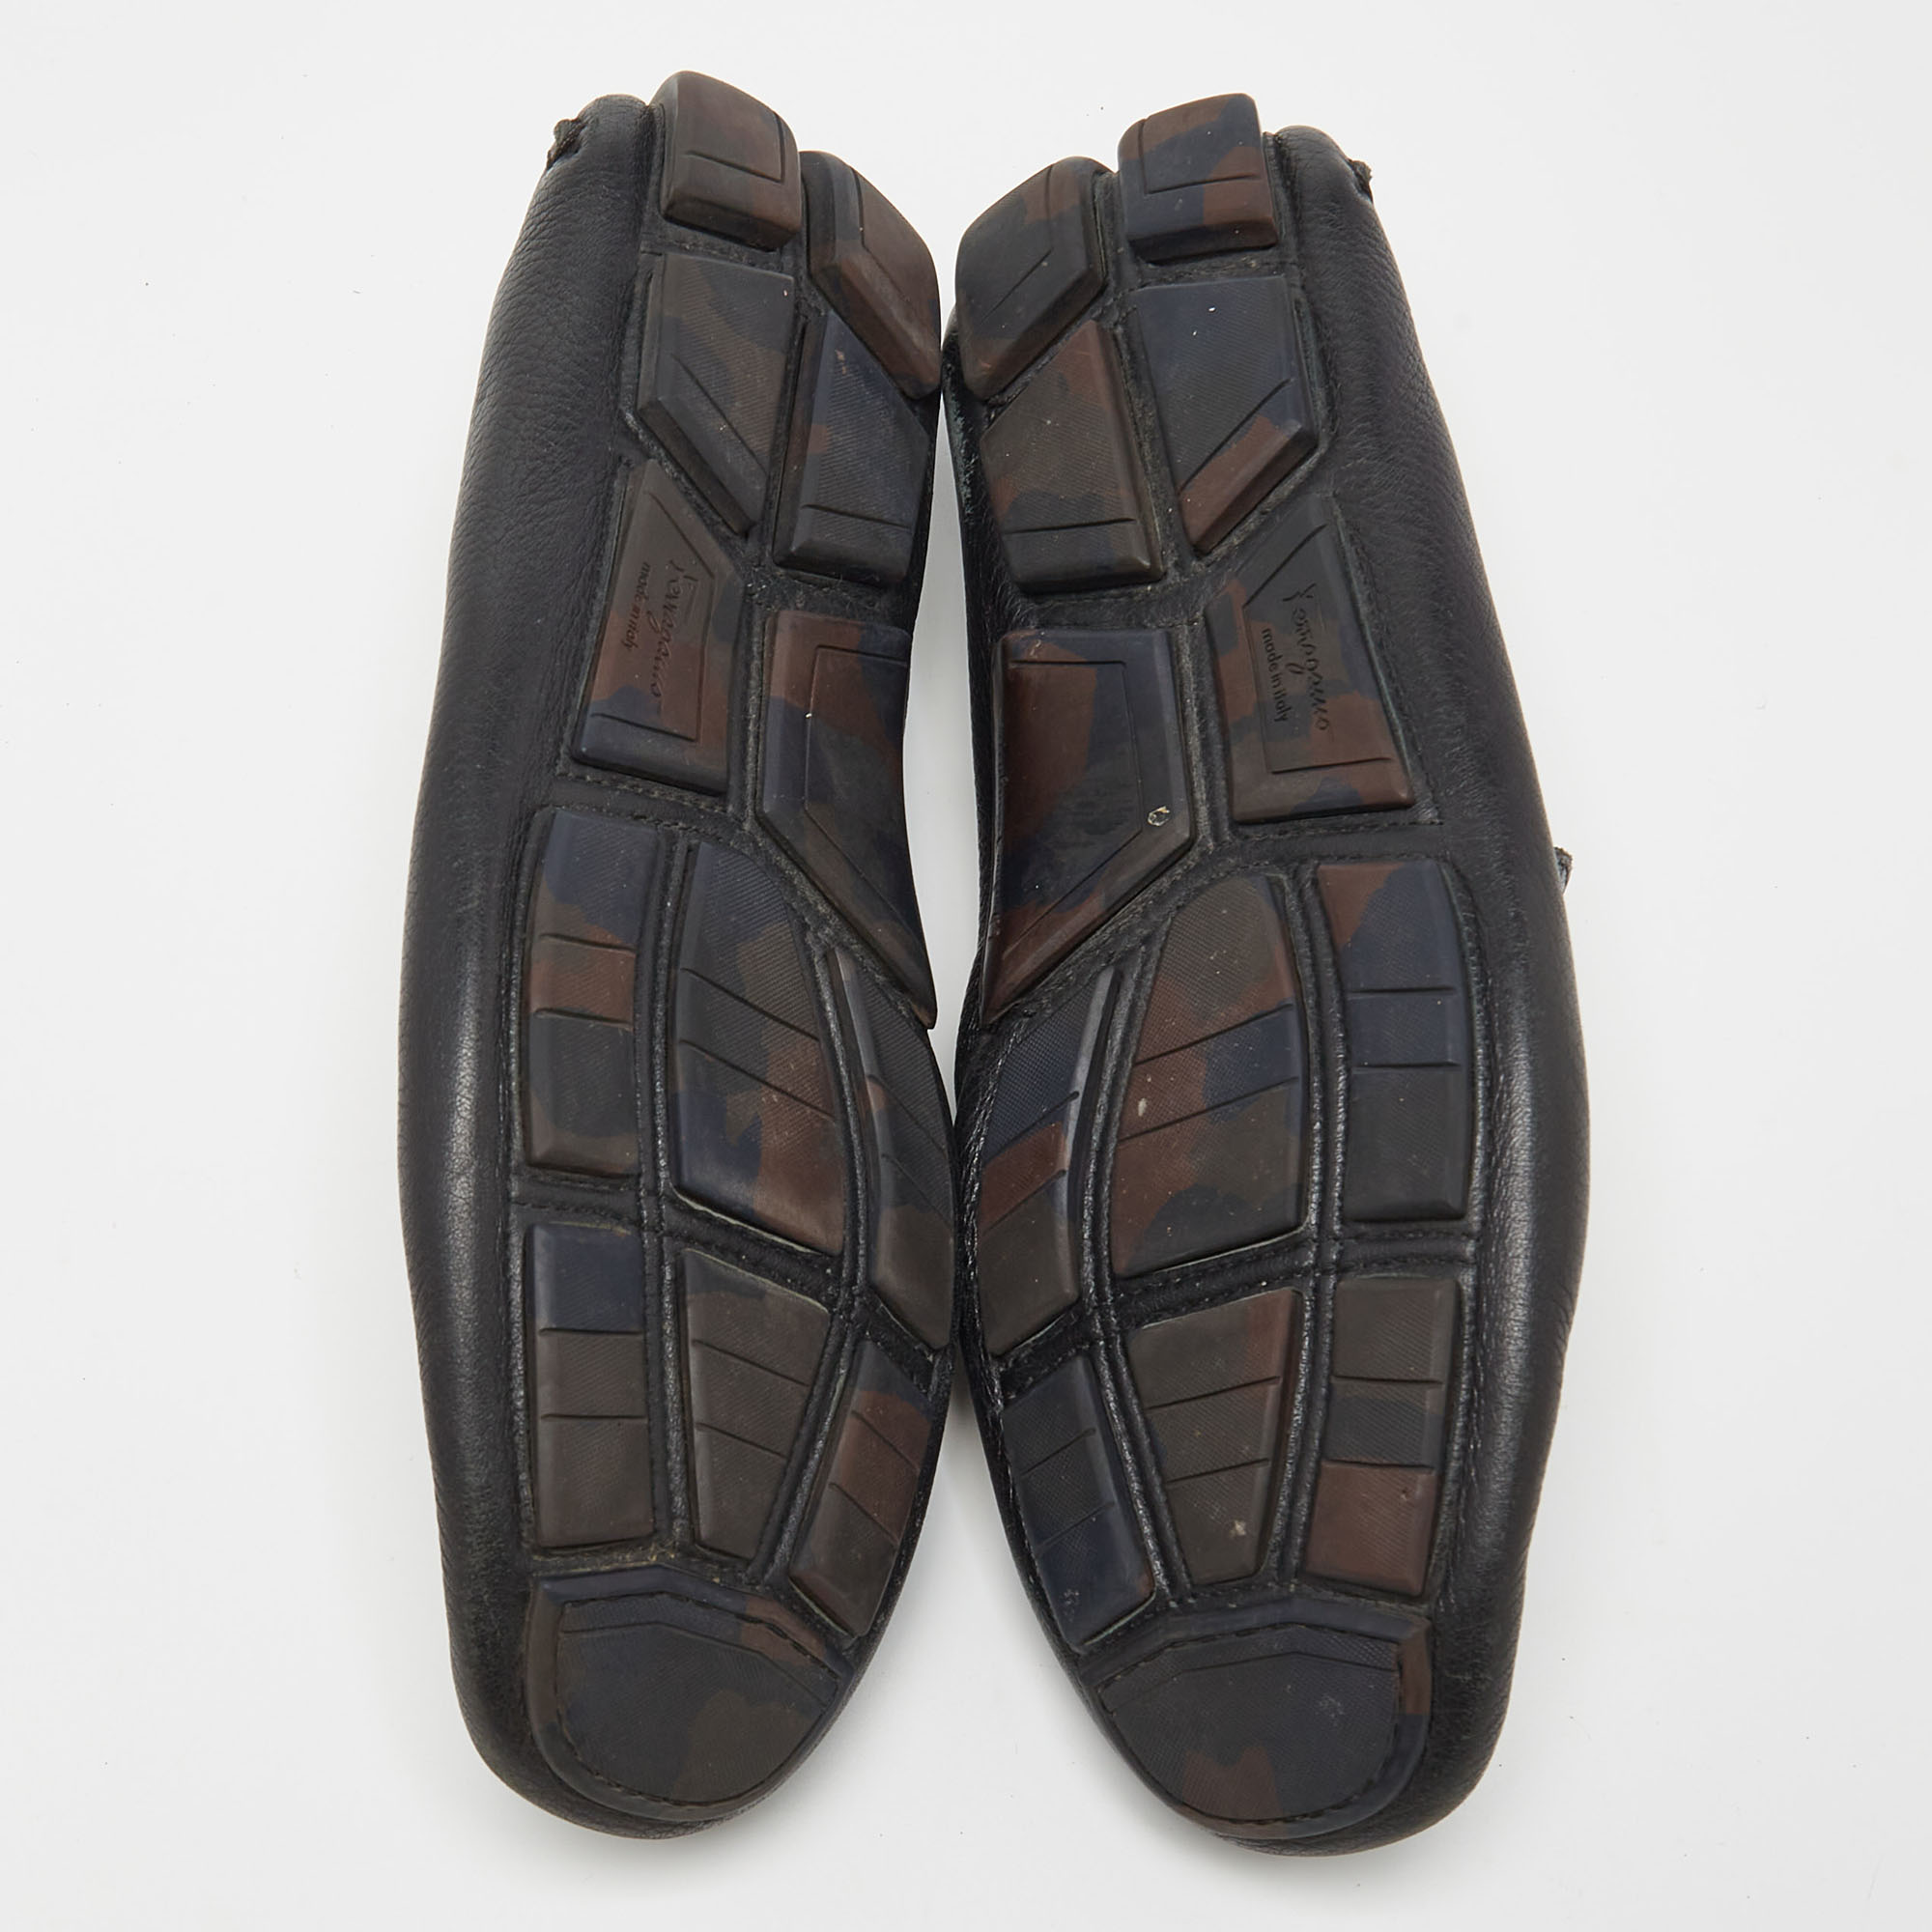 Salvatore Ferragamo Black Leather Slip On Loafers Size 42.5